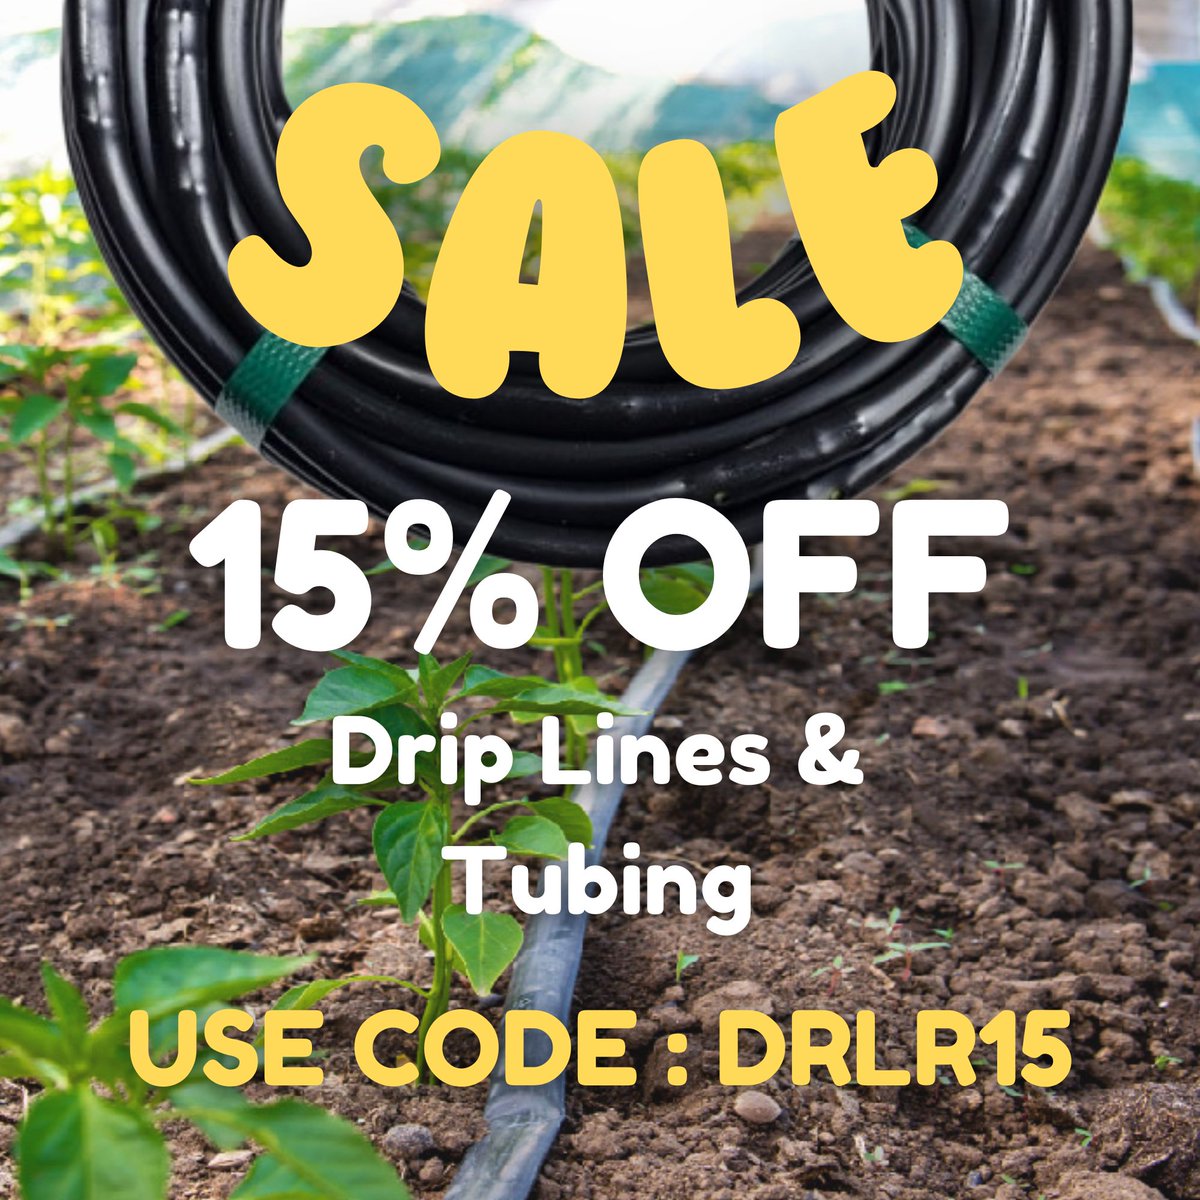 🌿 Dive into our LIMITED TIME Tubing Sale! 🌿 
Enjoy 15% off until 5/7 with code DRLR15
🌟Shop Here: dripworks.com/tubing-sale

 #DripWorks #GardenSale #SummerGardening #SummerGarden #Springgarden #Gardentools #Dripirrigation #gardeningtips #gardenBed